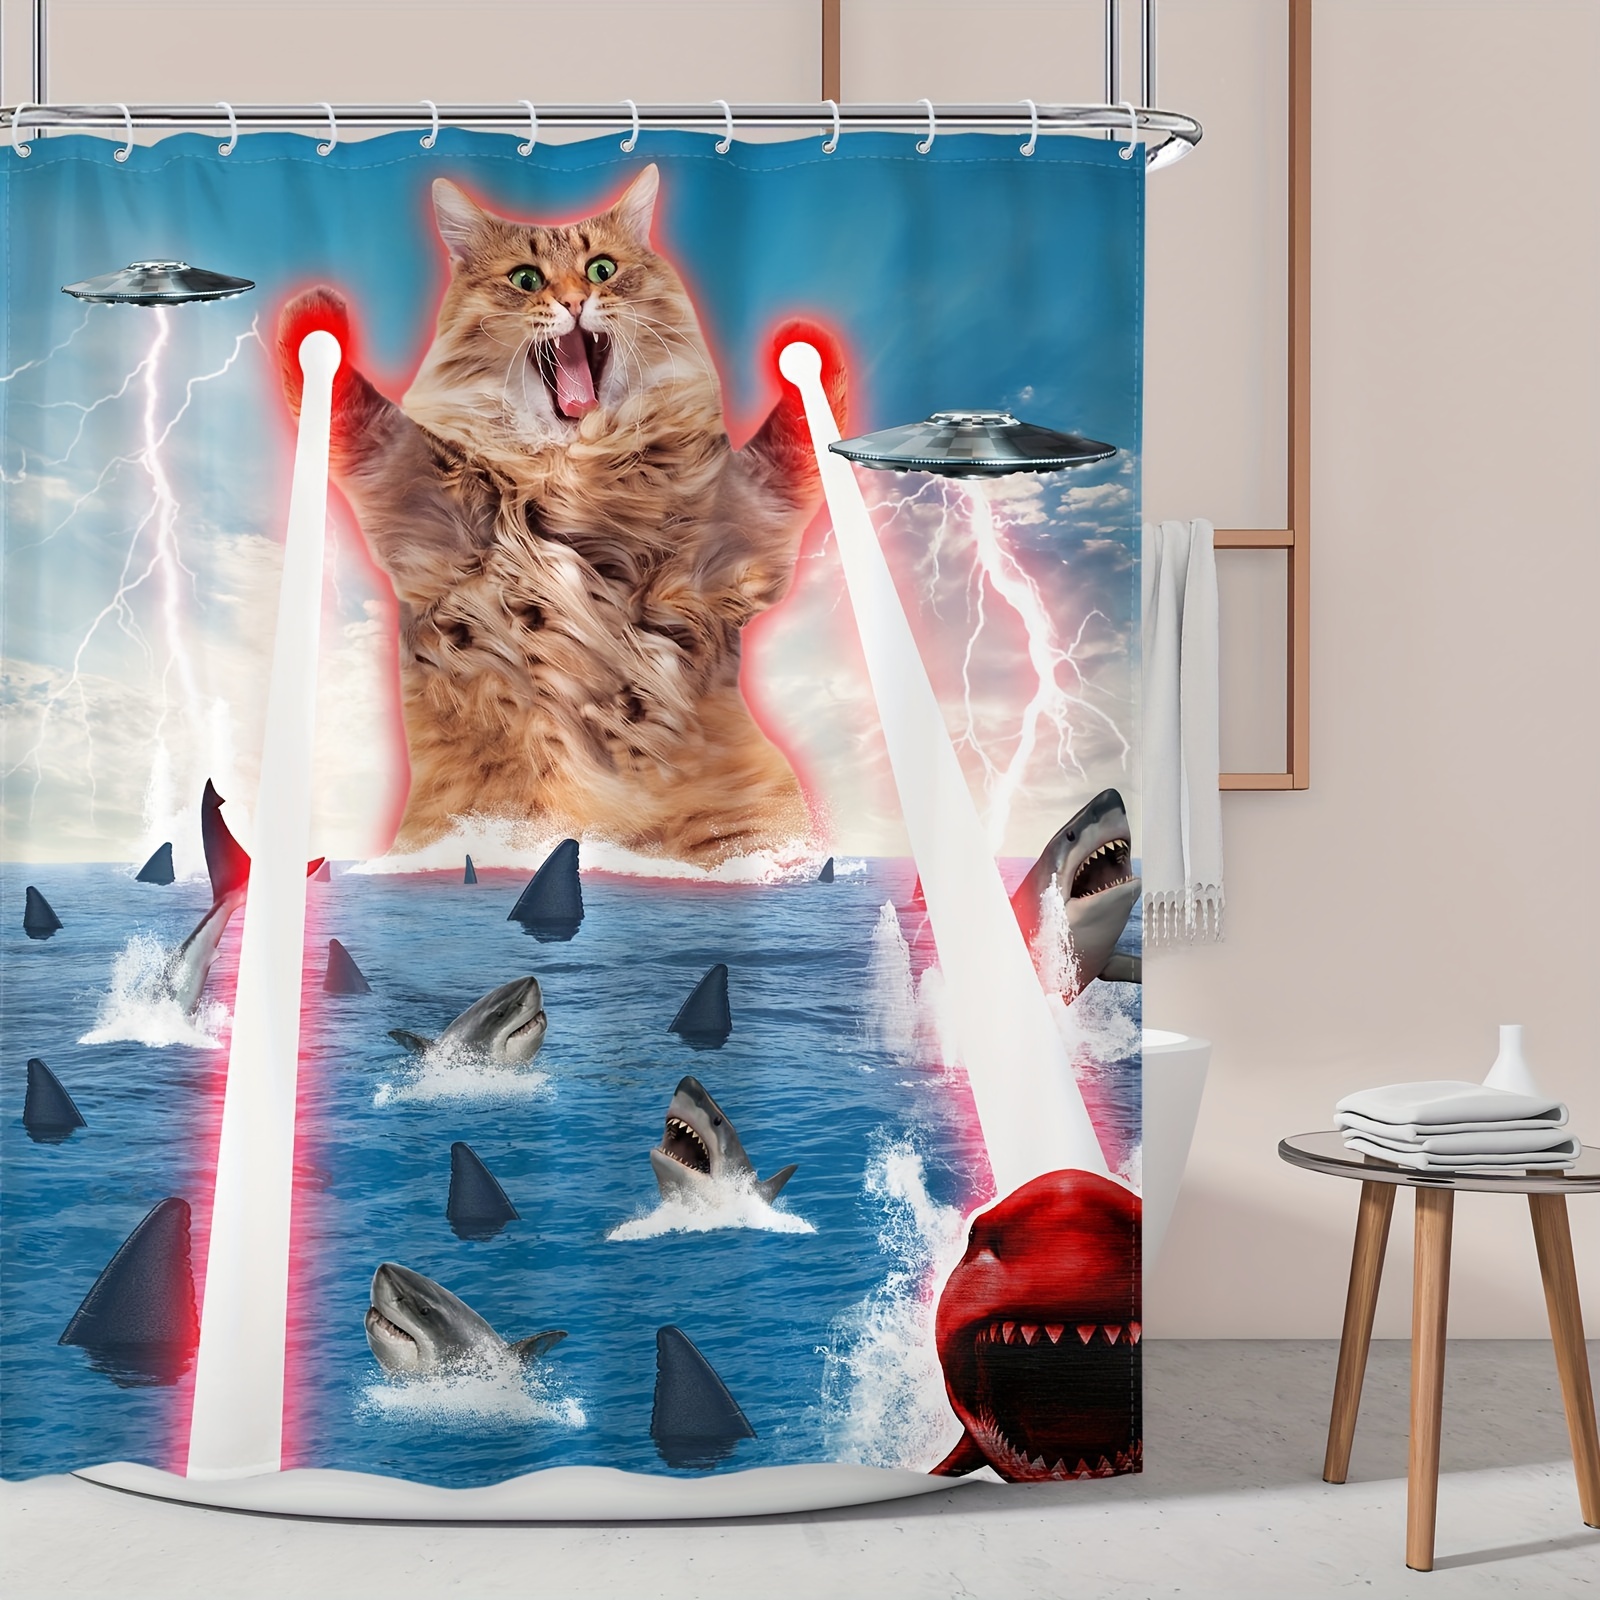 Funny Shower Curtains Collection cortina de ducha divertida